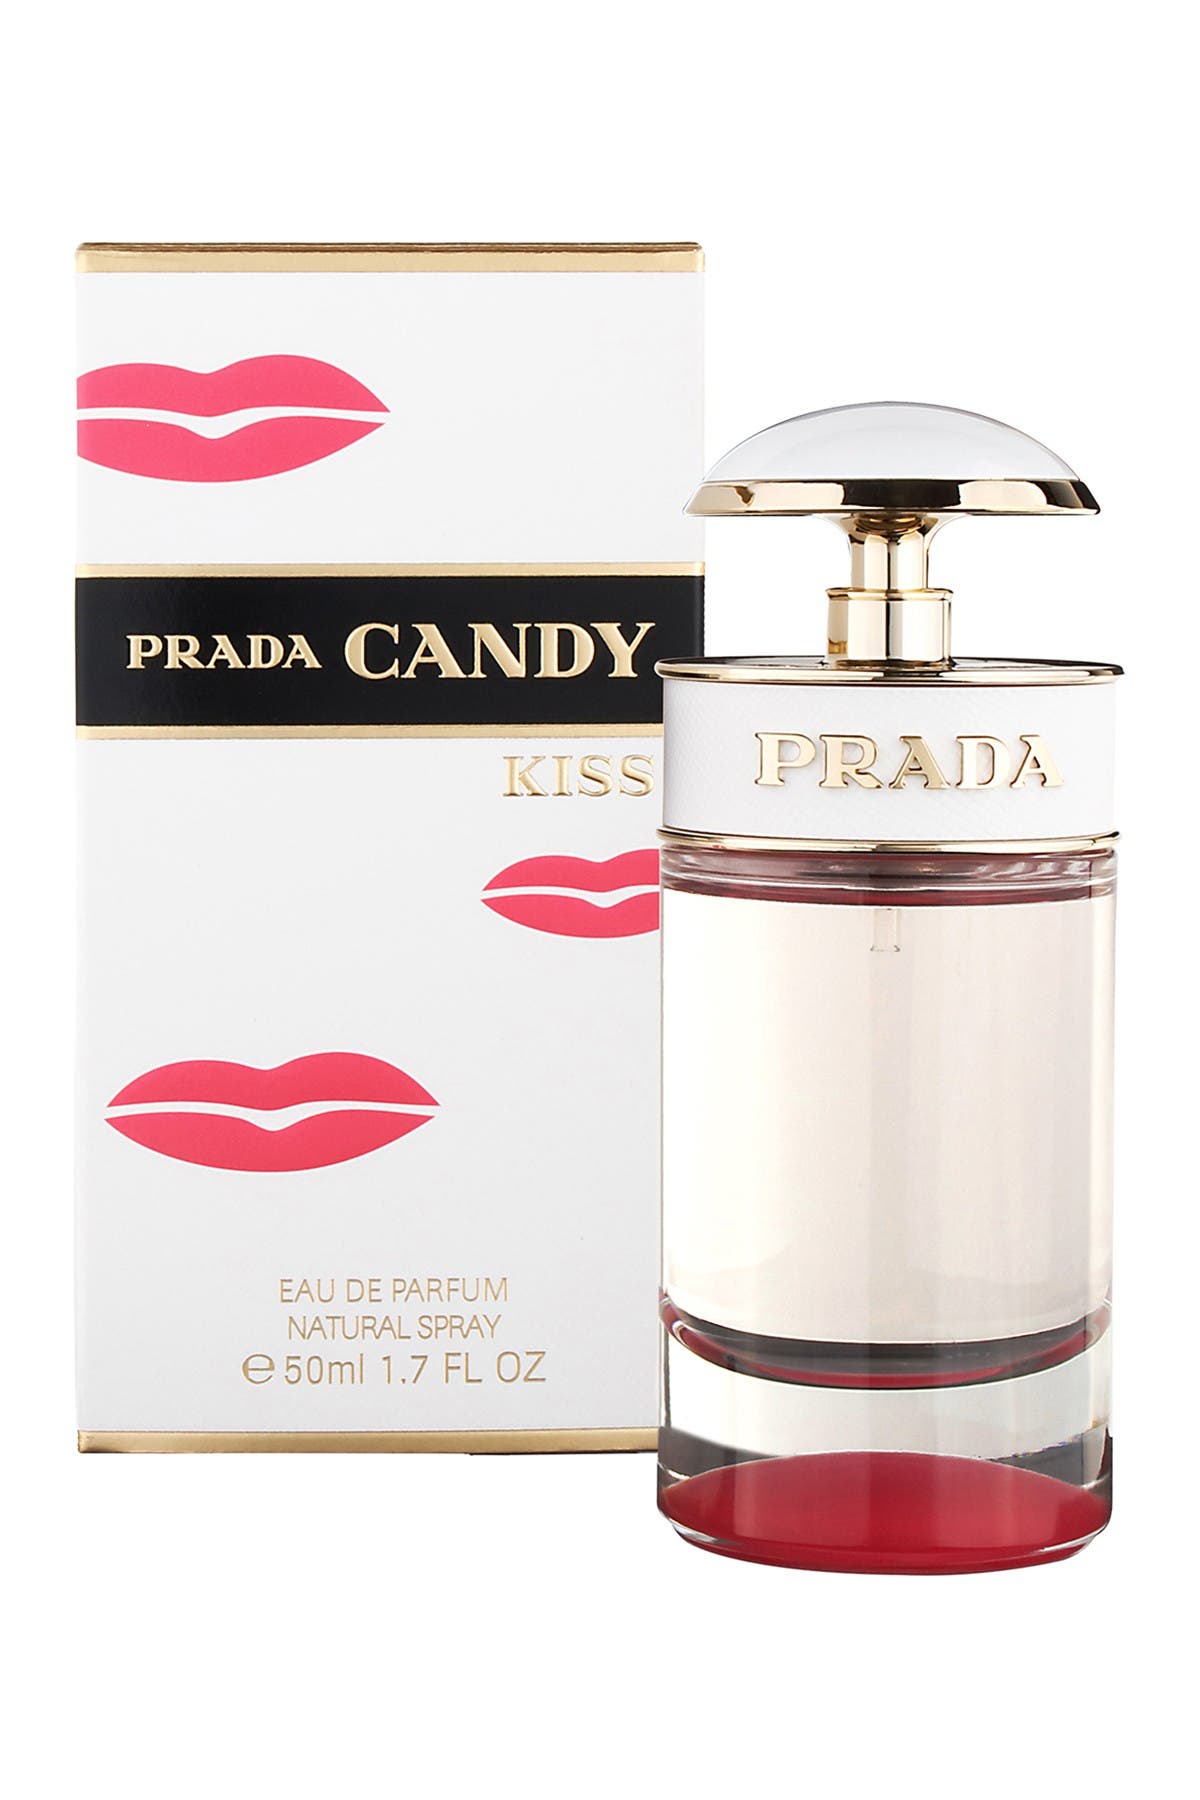 prada candy perfume 1.7 oz